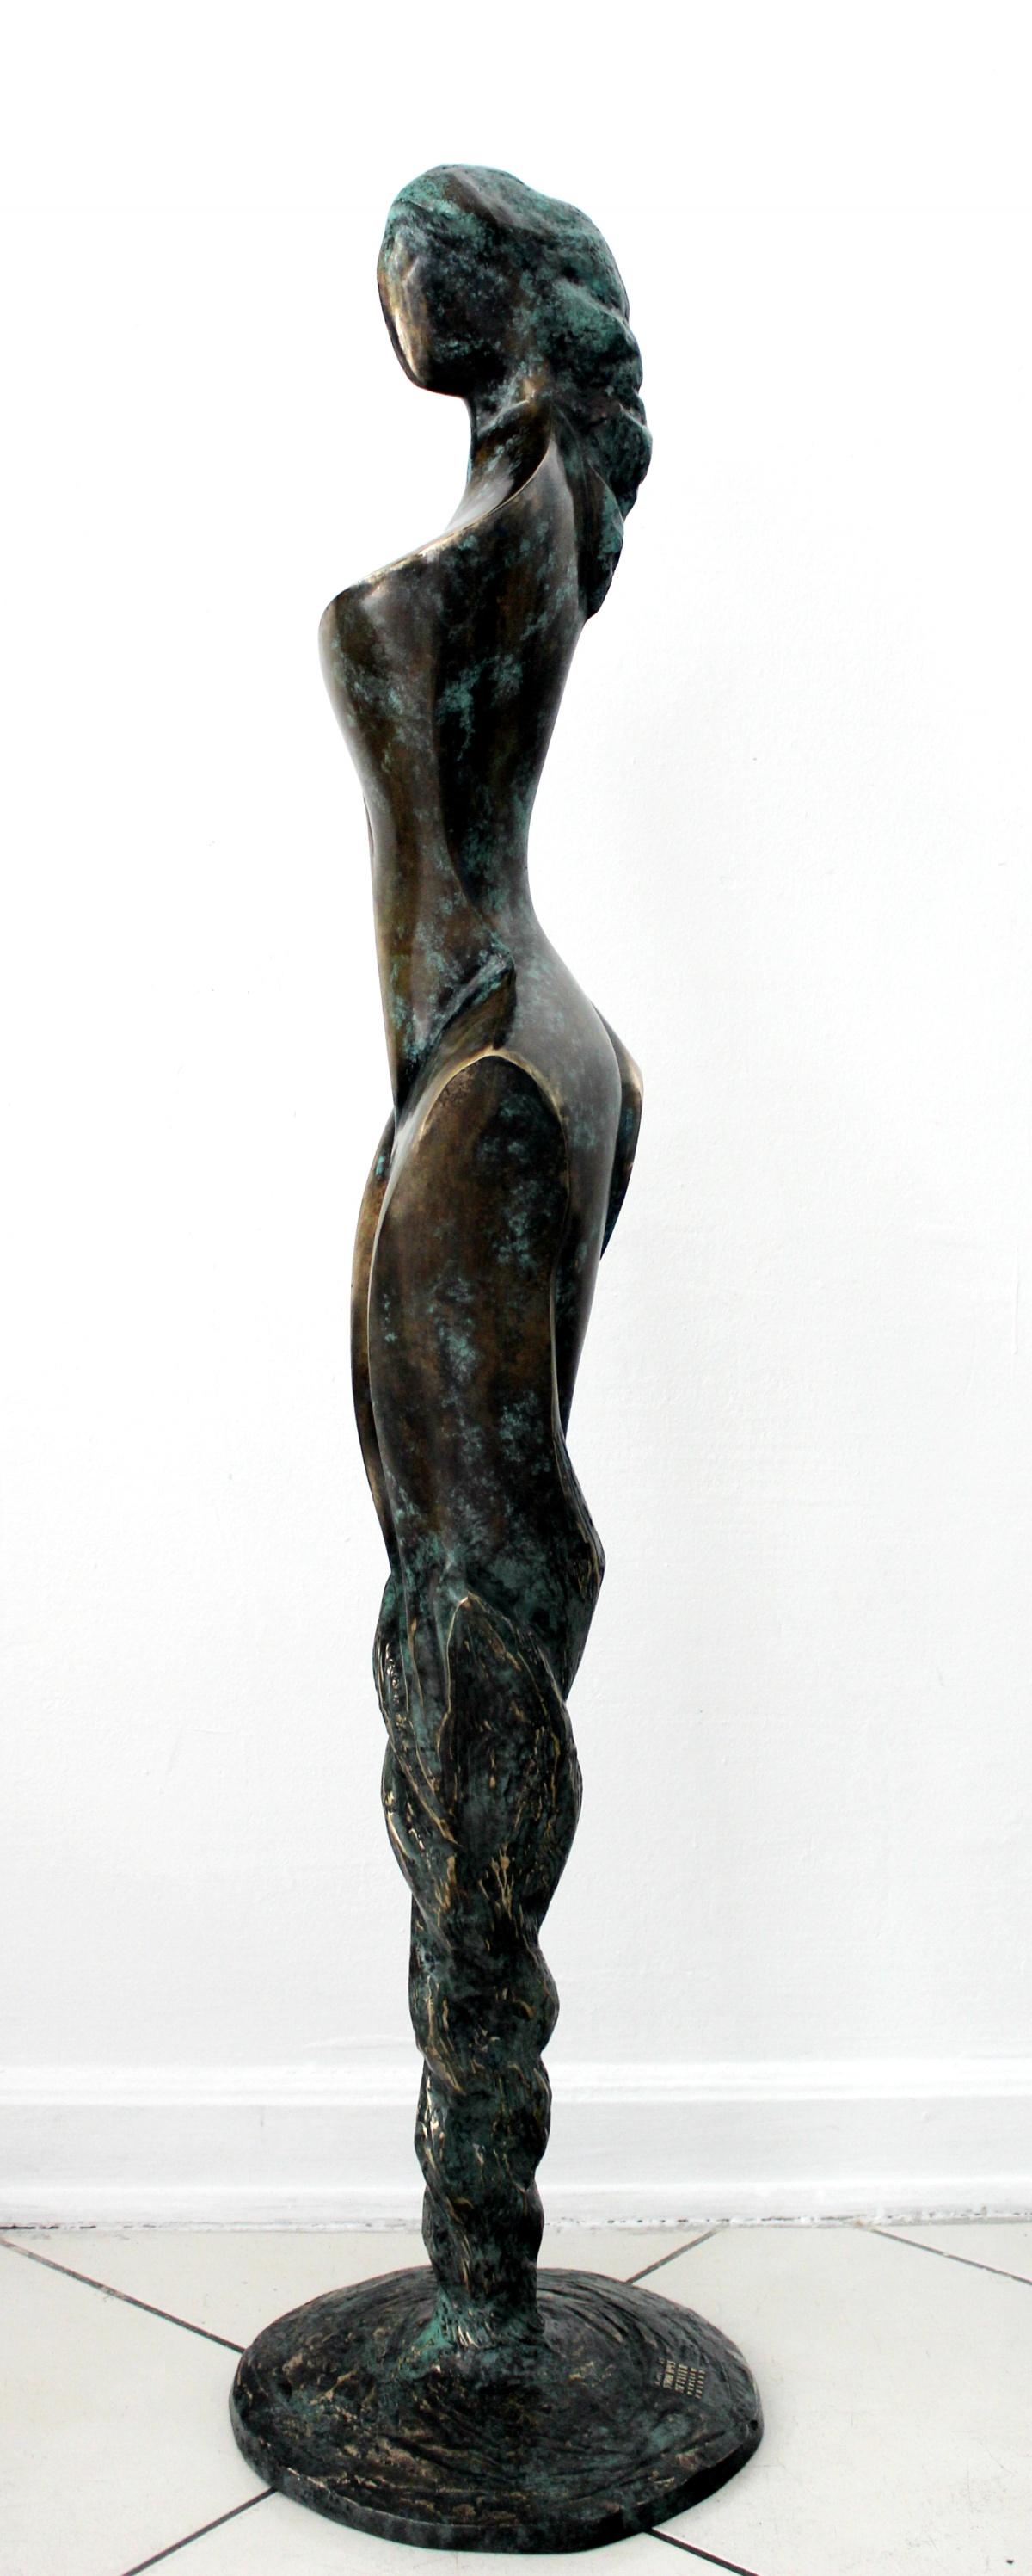 Inspiration II - Contemporary Bronze Sculpture, Abstract, Figurative, Nude - Gold Figurative Sculpture by Stanisław Wysocki